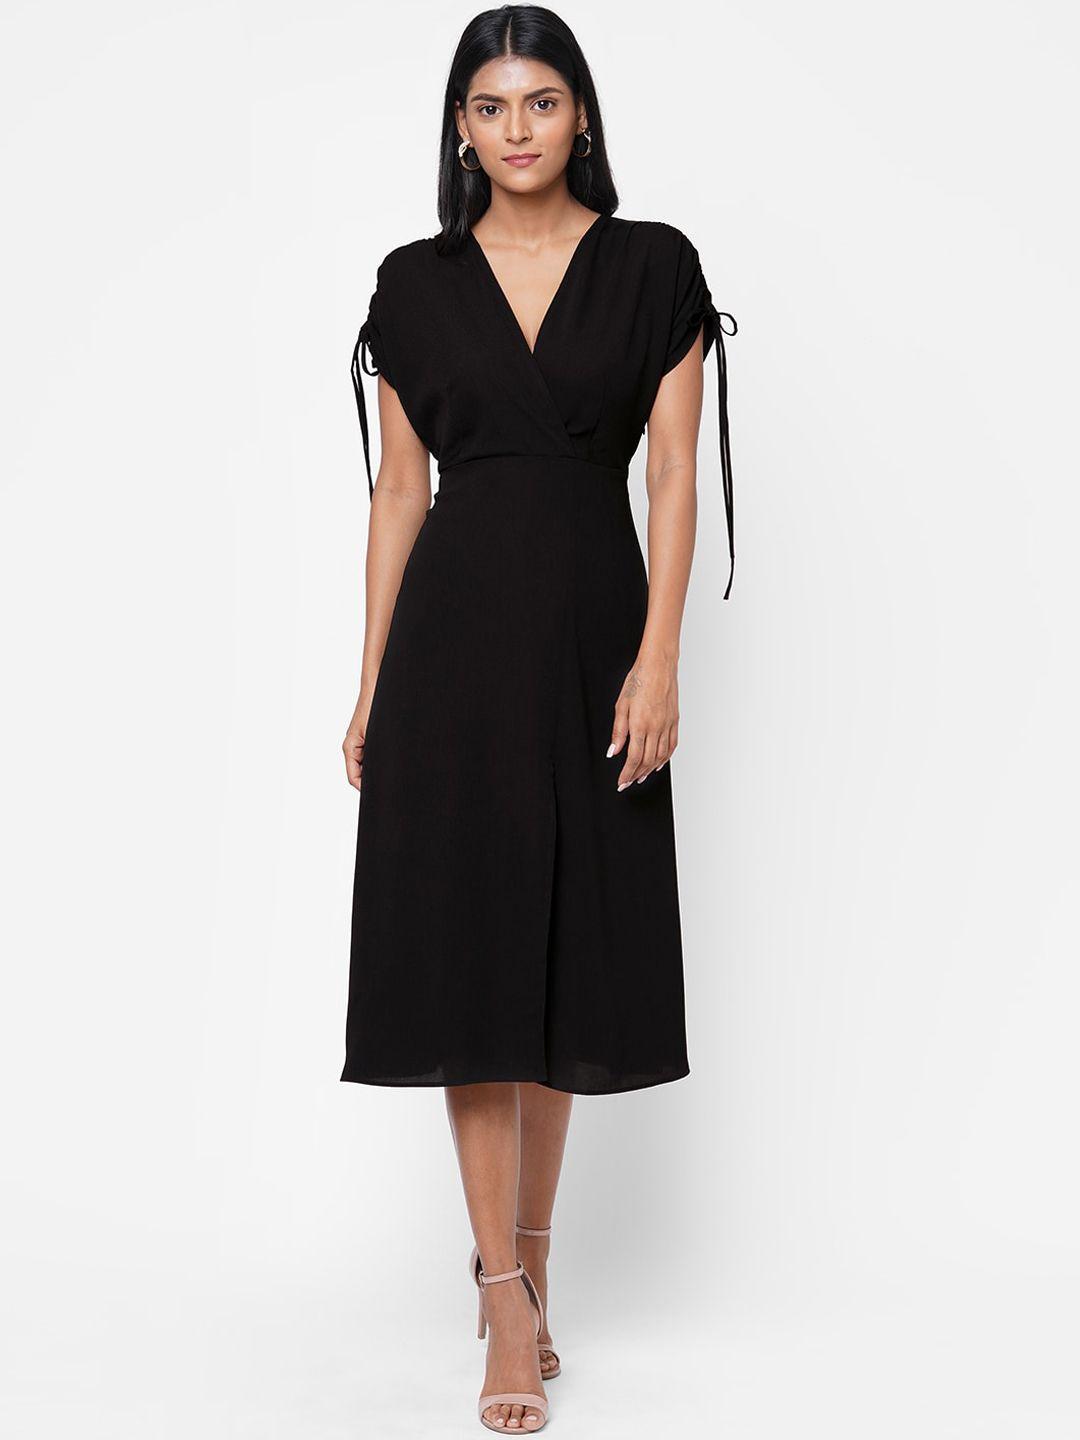 20dresses women black solid wrap dress